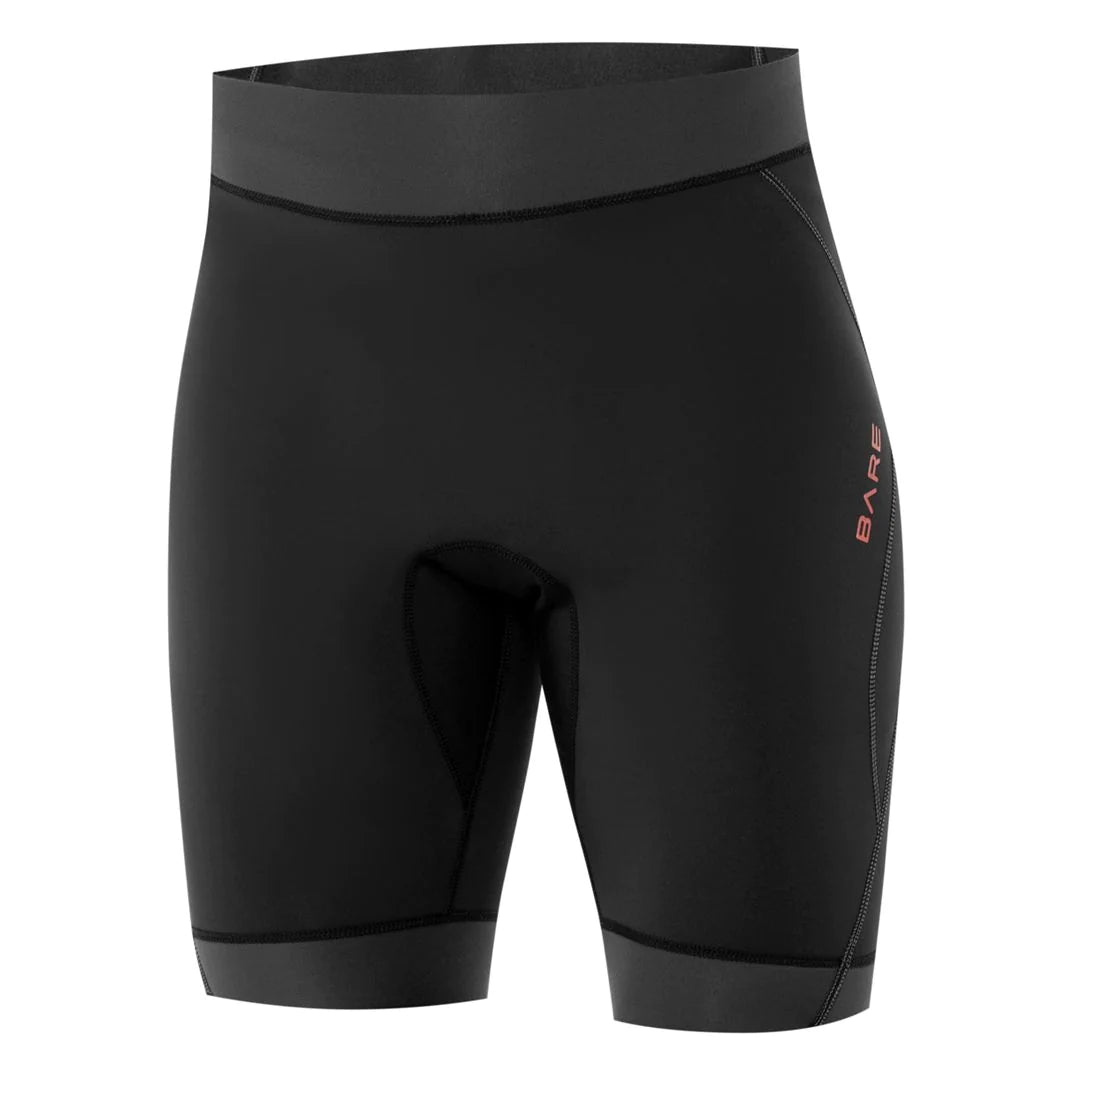 BARE EXOWEAR Men's Shorts for Suba Diving